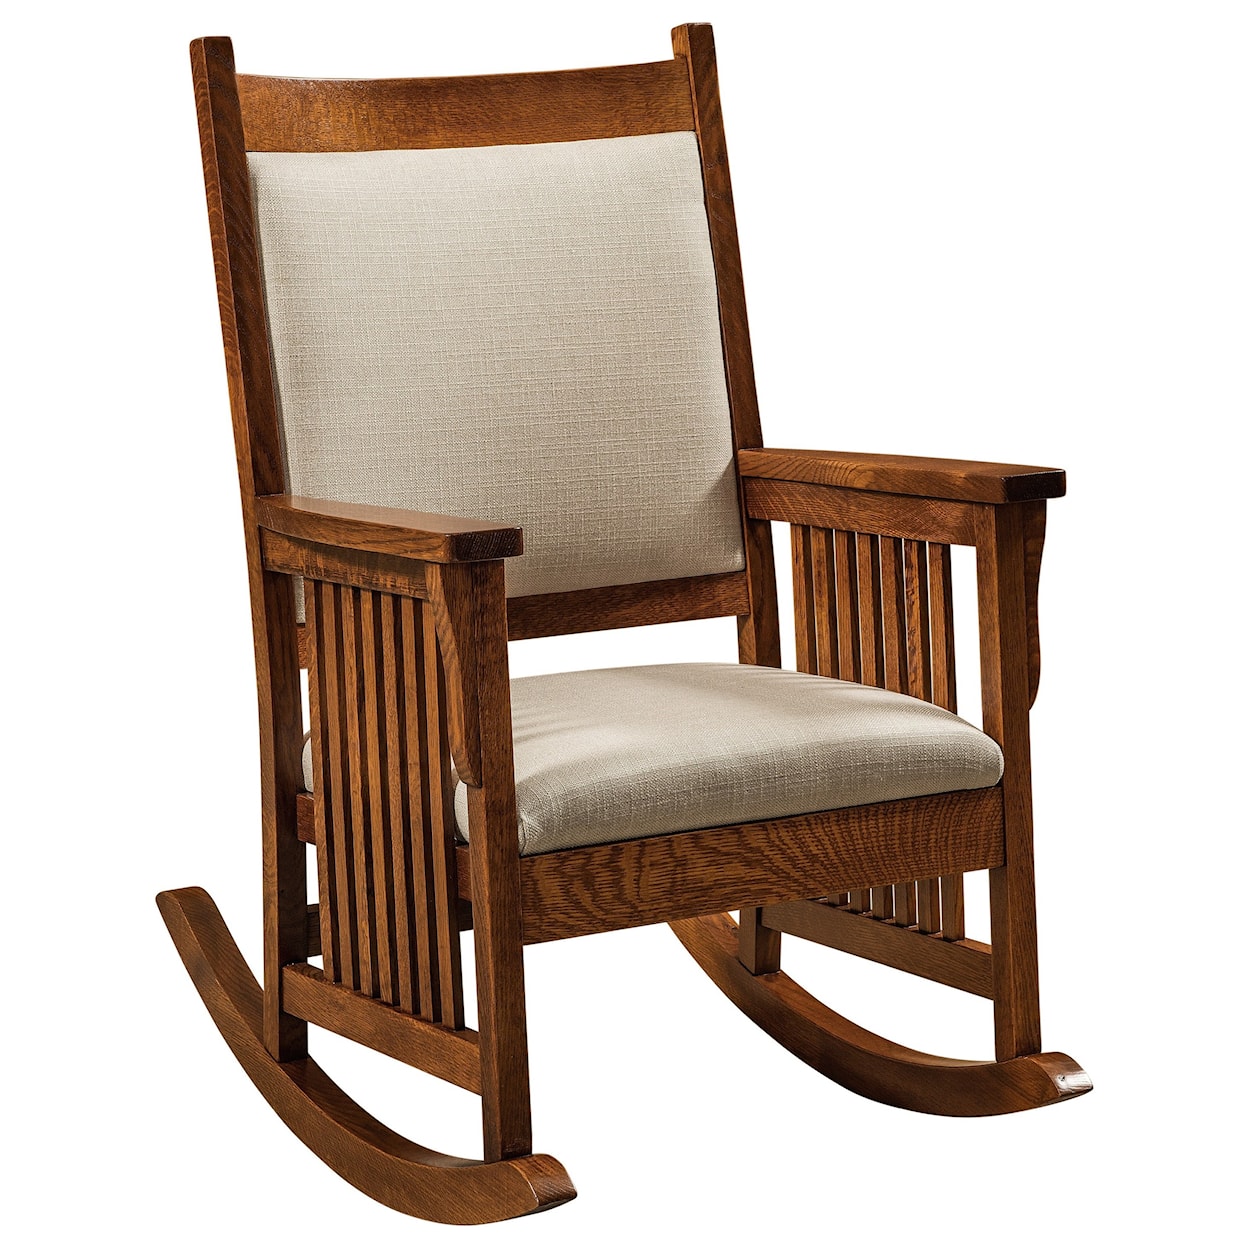 F&N Woodworking Madison Rocker Arm Chair - Fabric Seat